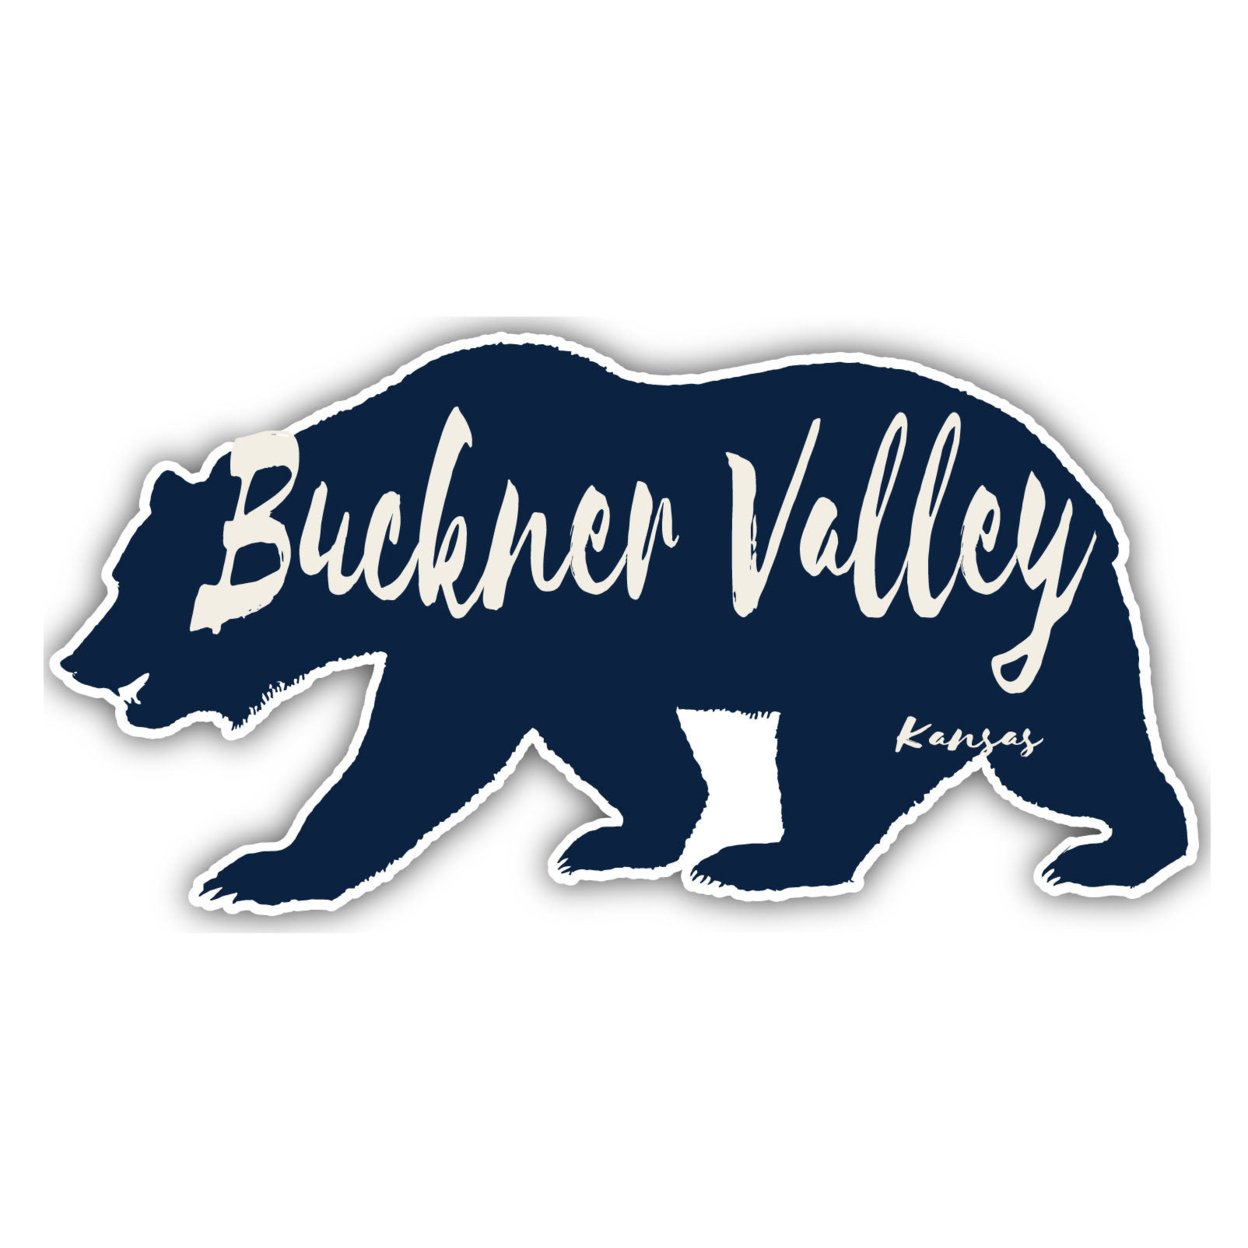 Buckner Valley Kansas Souvenir Decorative Stickers (Choose Theme And Size) - Single Unit, 2-Inch, Bear